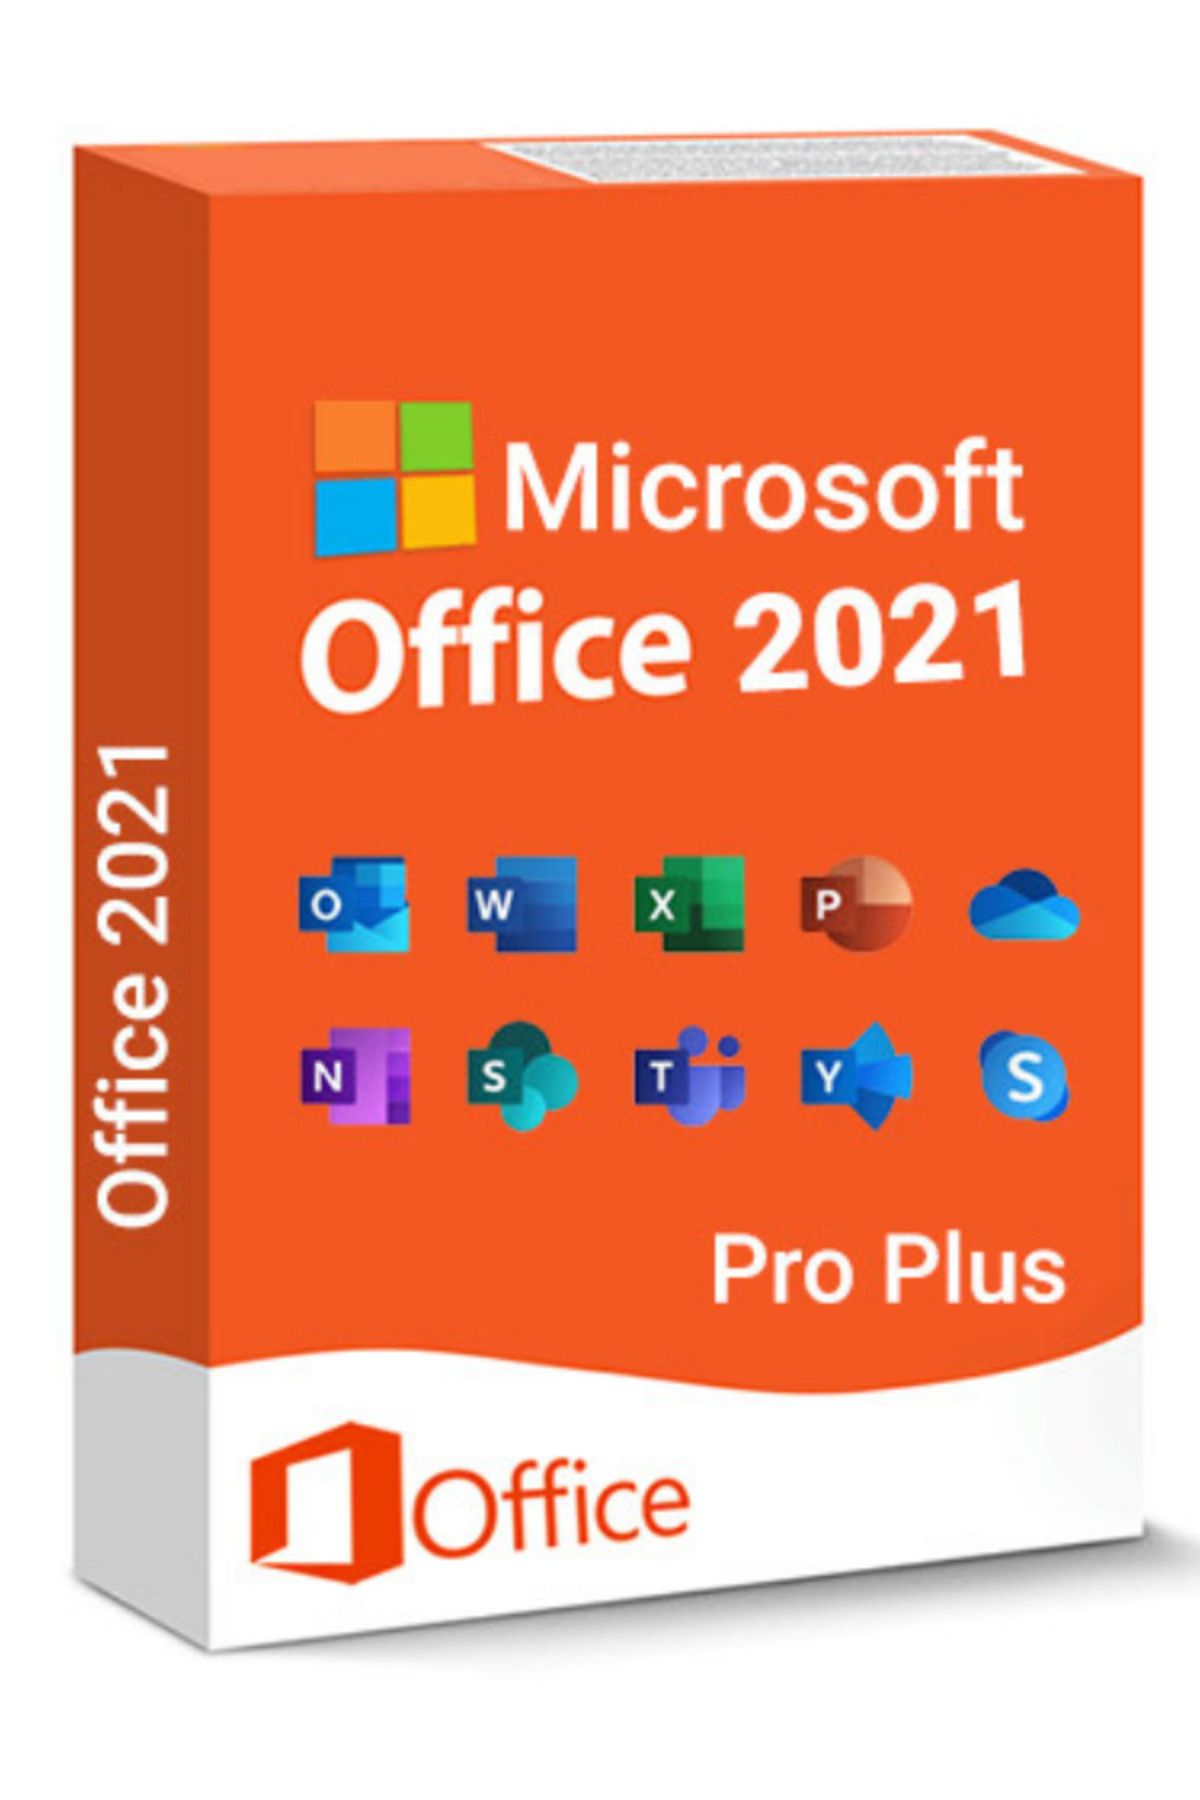 Лицензия офис 2021. Office 2021 professional Plus. Office 2021 Pro. MS Office 2021 Pro Plus. Коробка Office 2021 professional Plus.